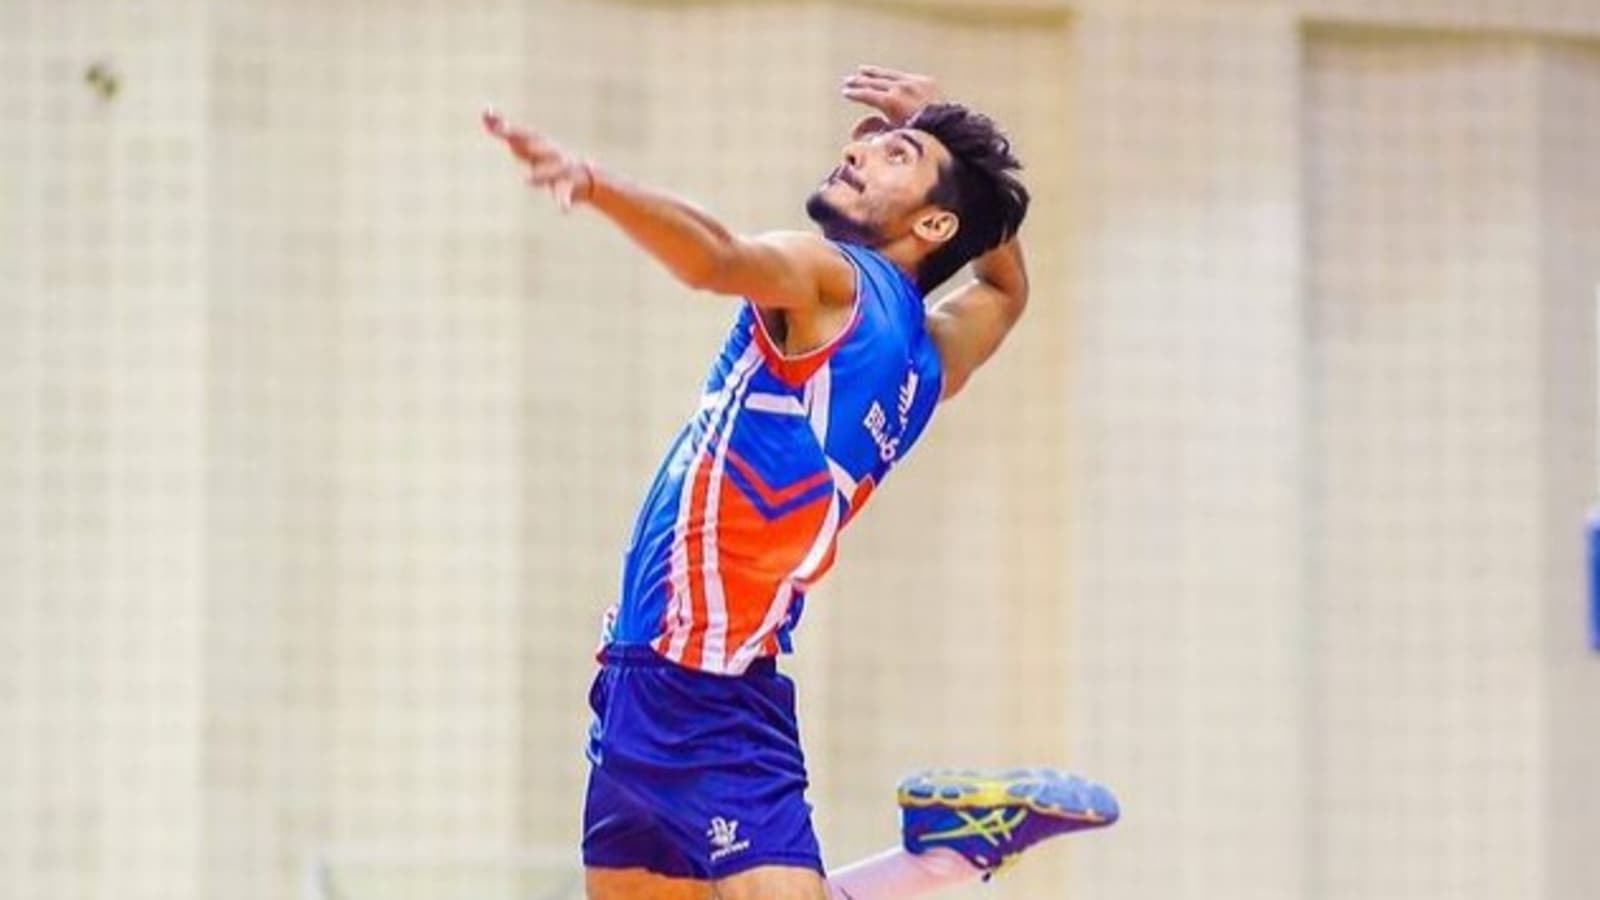 PVL will reignite interest in volleyball, says Amit Gulia